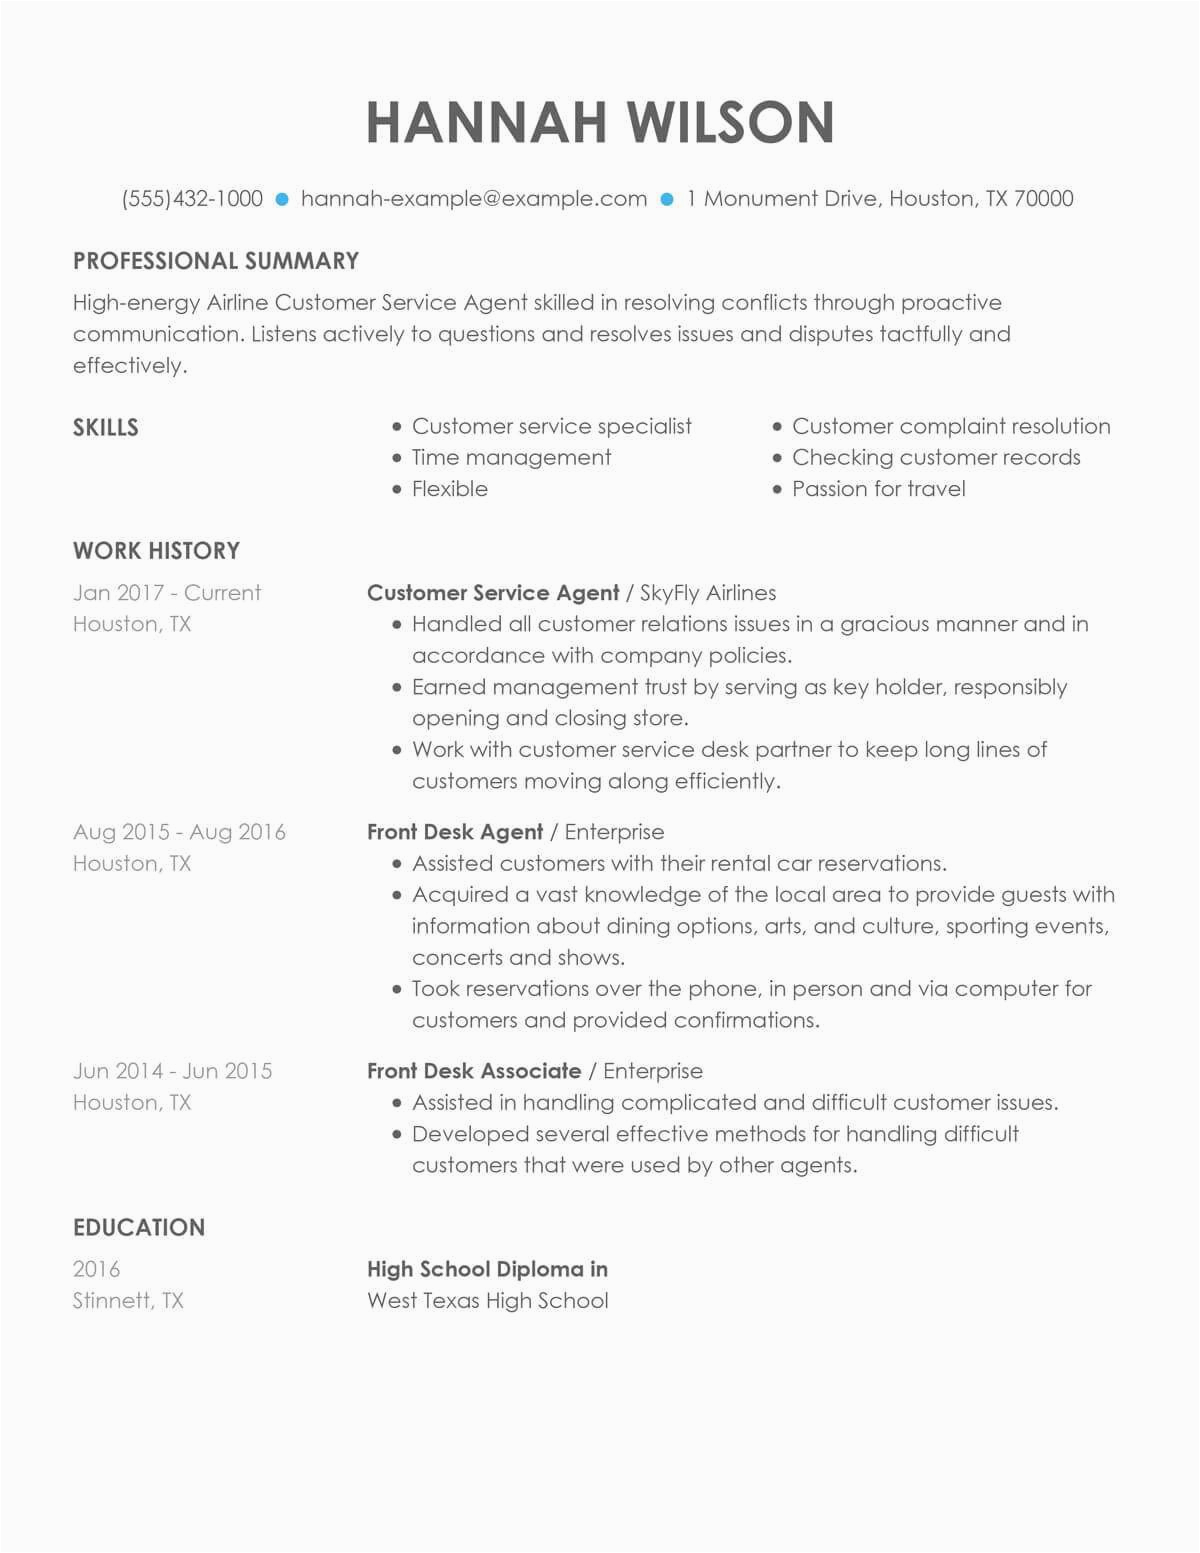 Sample Resume for Customer Service Jobs Free 19 Customer Service Job Description for Resume